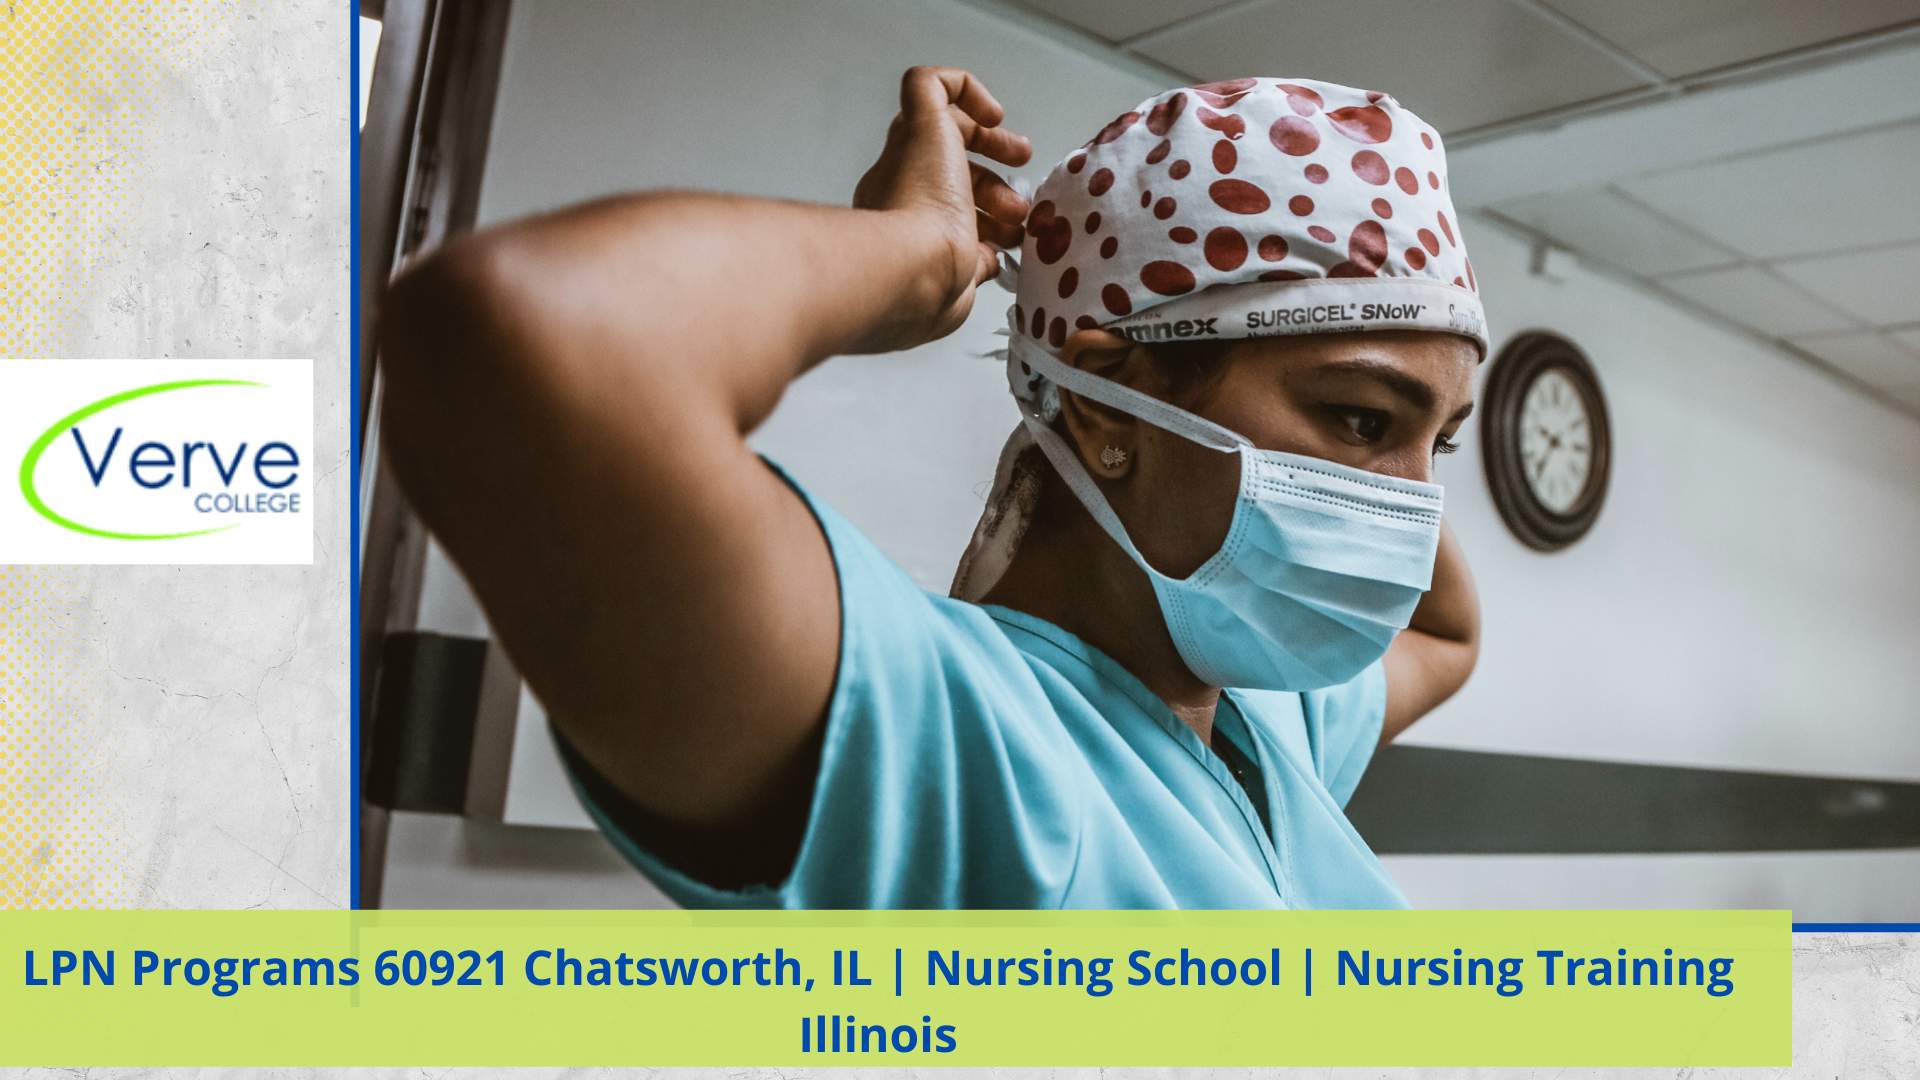 LPN Programs 60921 Chatsworth, IL | Nursing School | Nursing Training Illinois